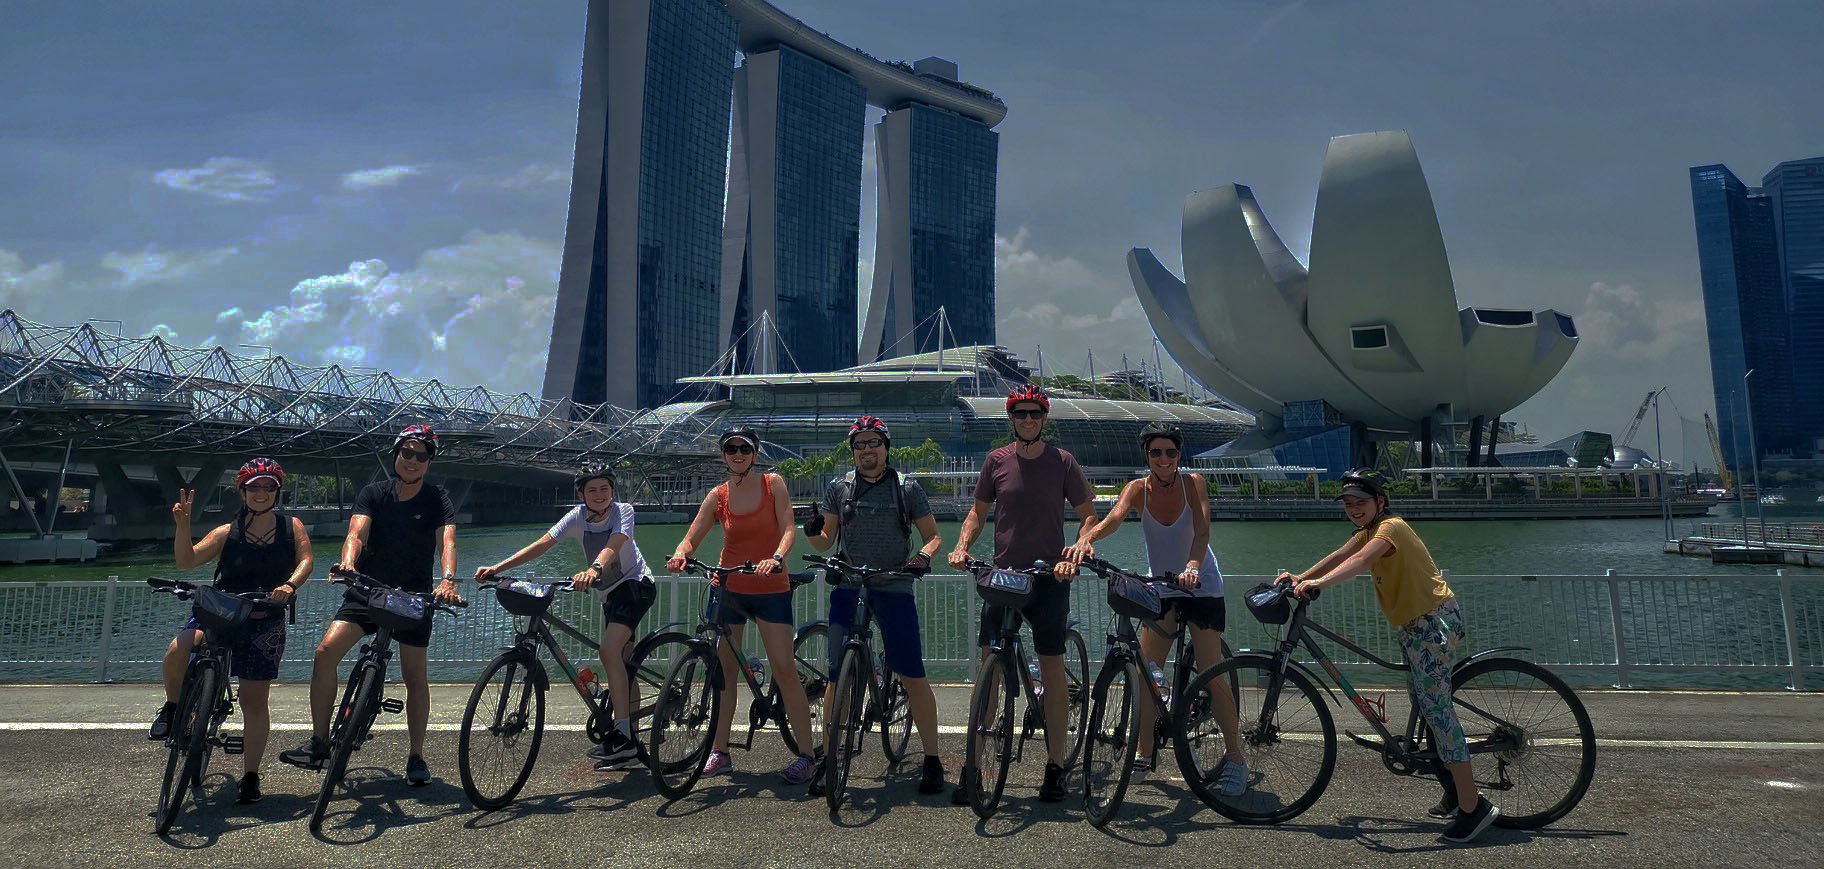 let's go bike tour singapore